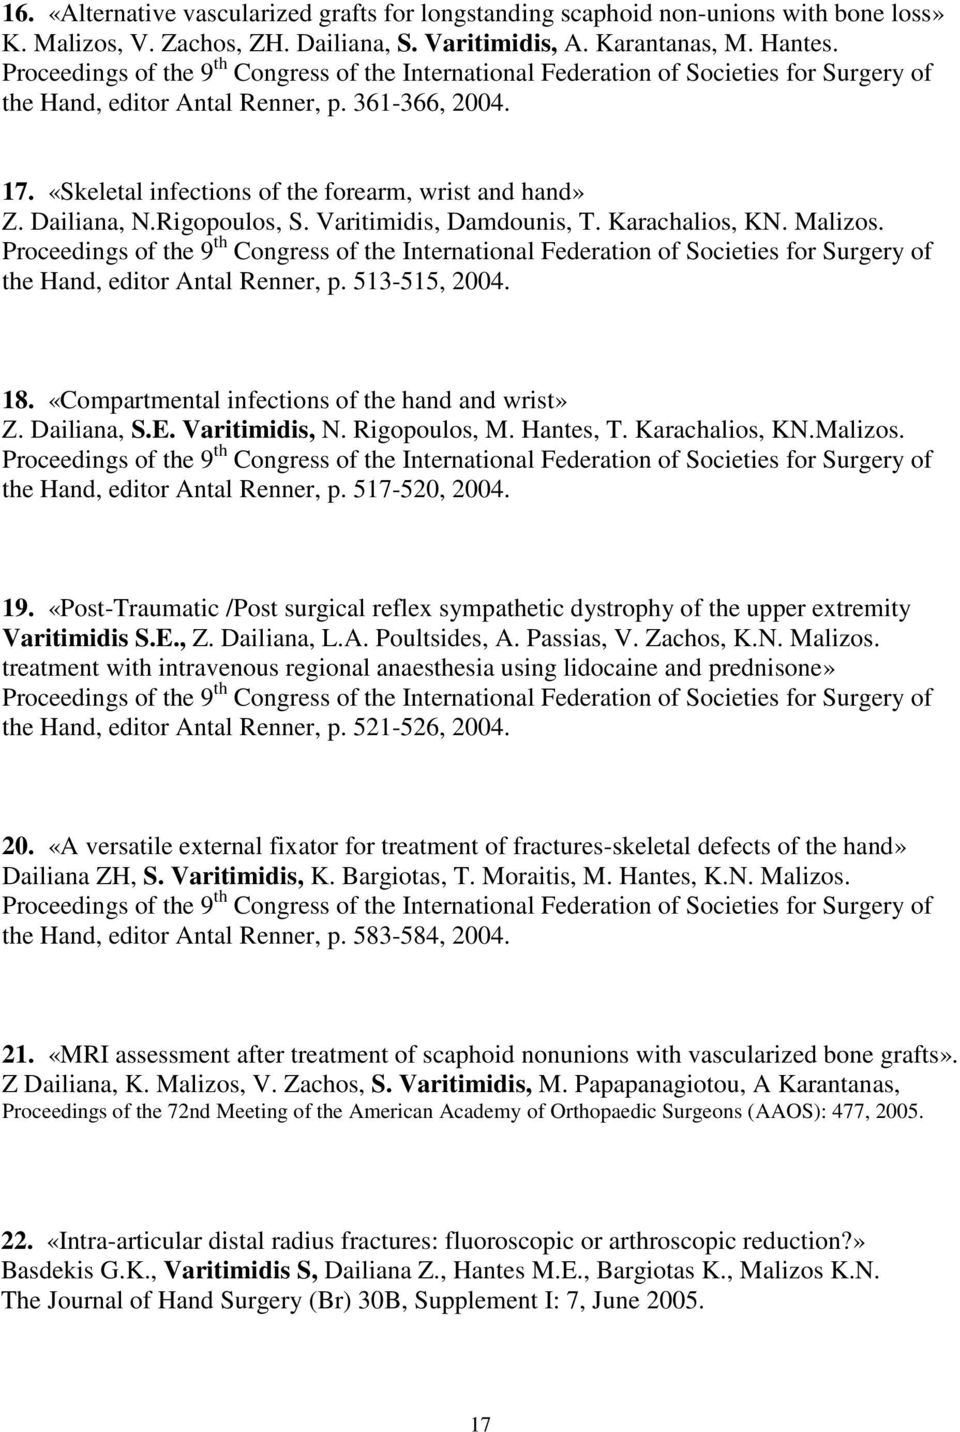 «Skeletal infections of the forearm, wrist and hand» Ζ. Dailiana, N.Rigopoulos, S. Varitimidis, Damdounis, T. Karachalios, KN. Malizos.